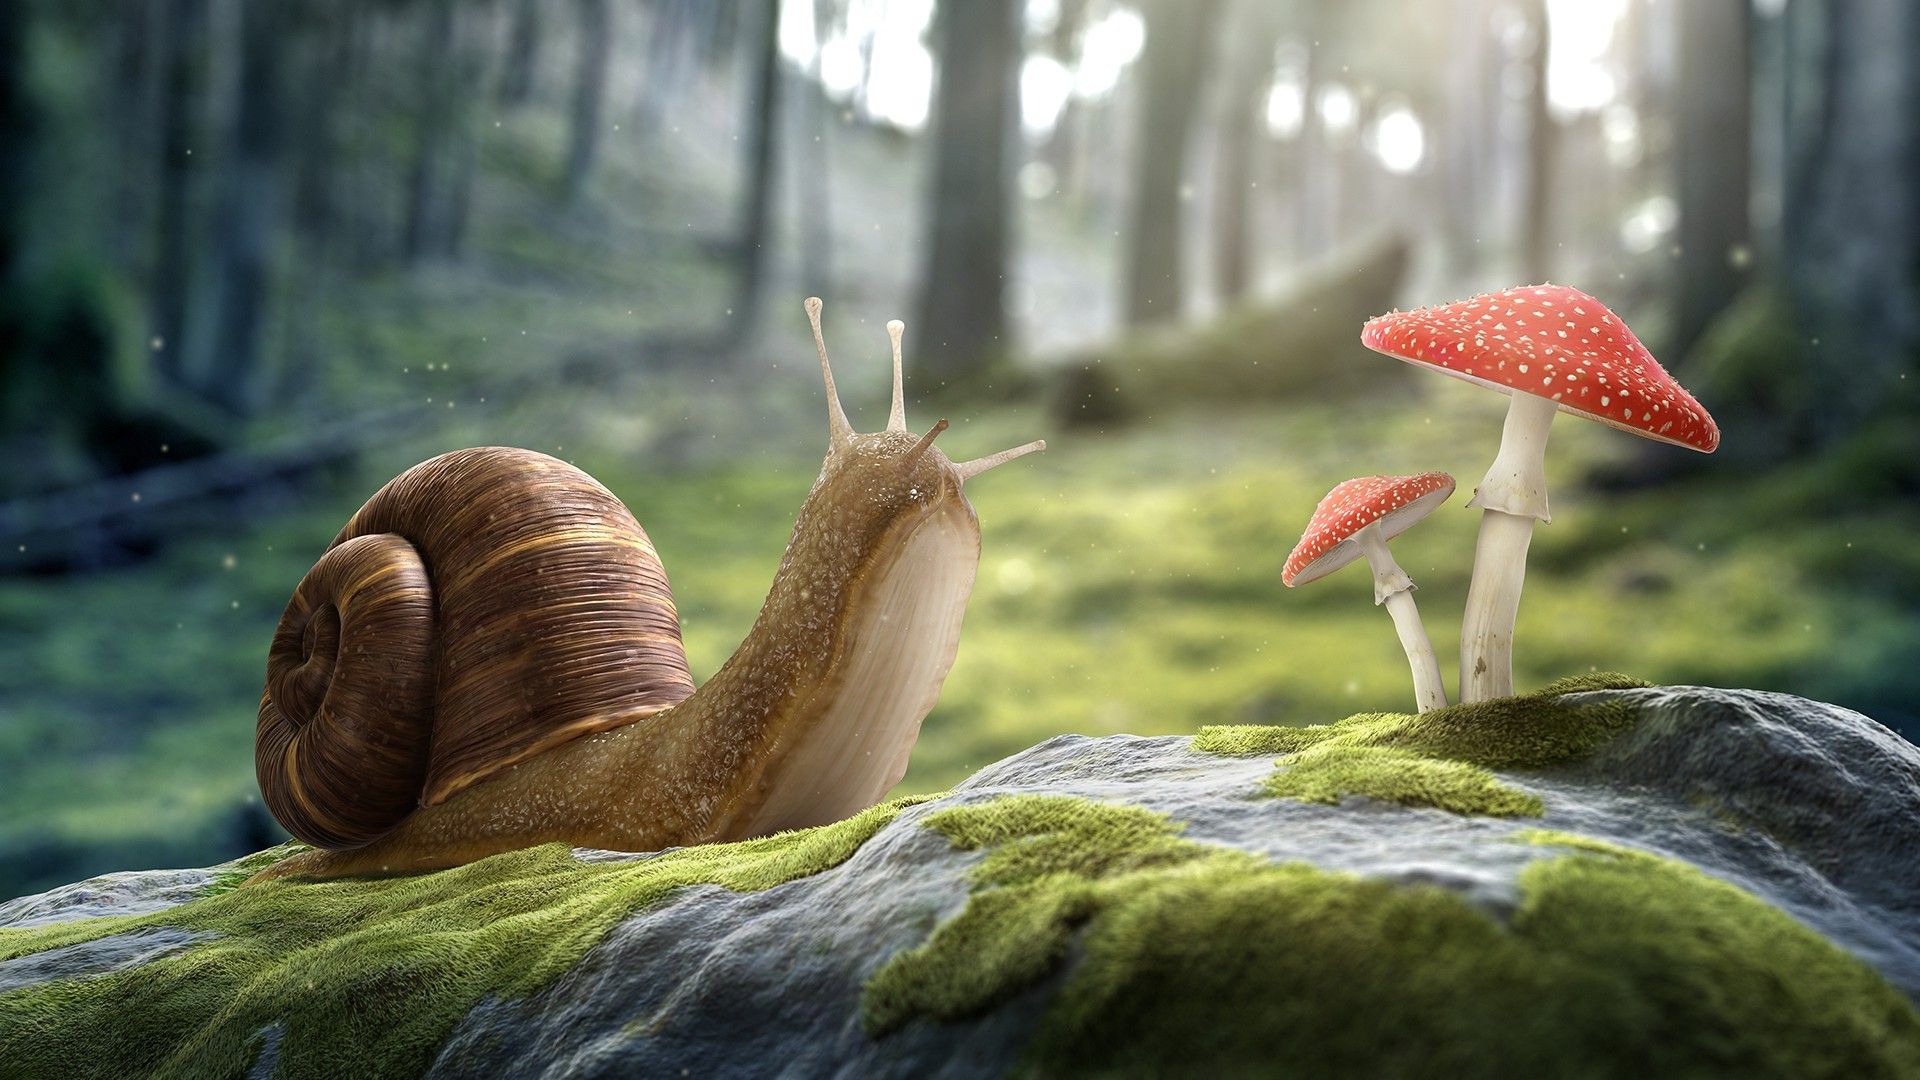 digital Art, Artwork, CGI, 3D, Nature, Stones, Snail, Mushroom ...